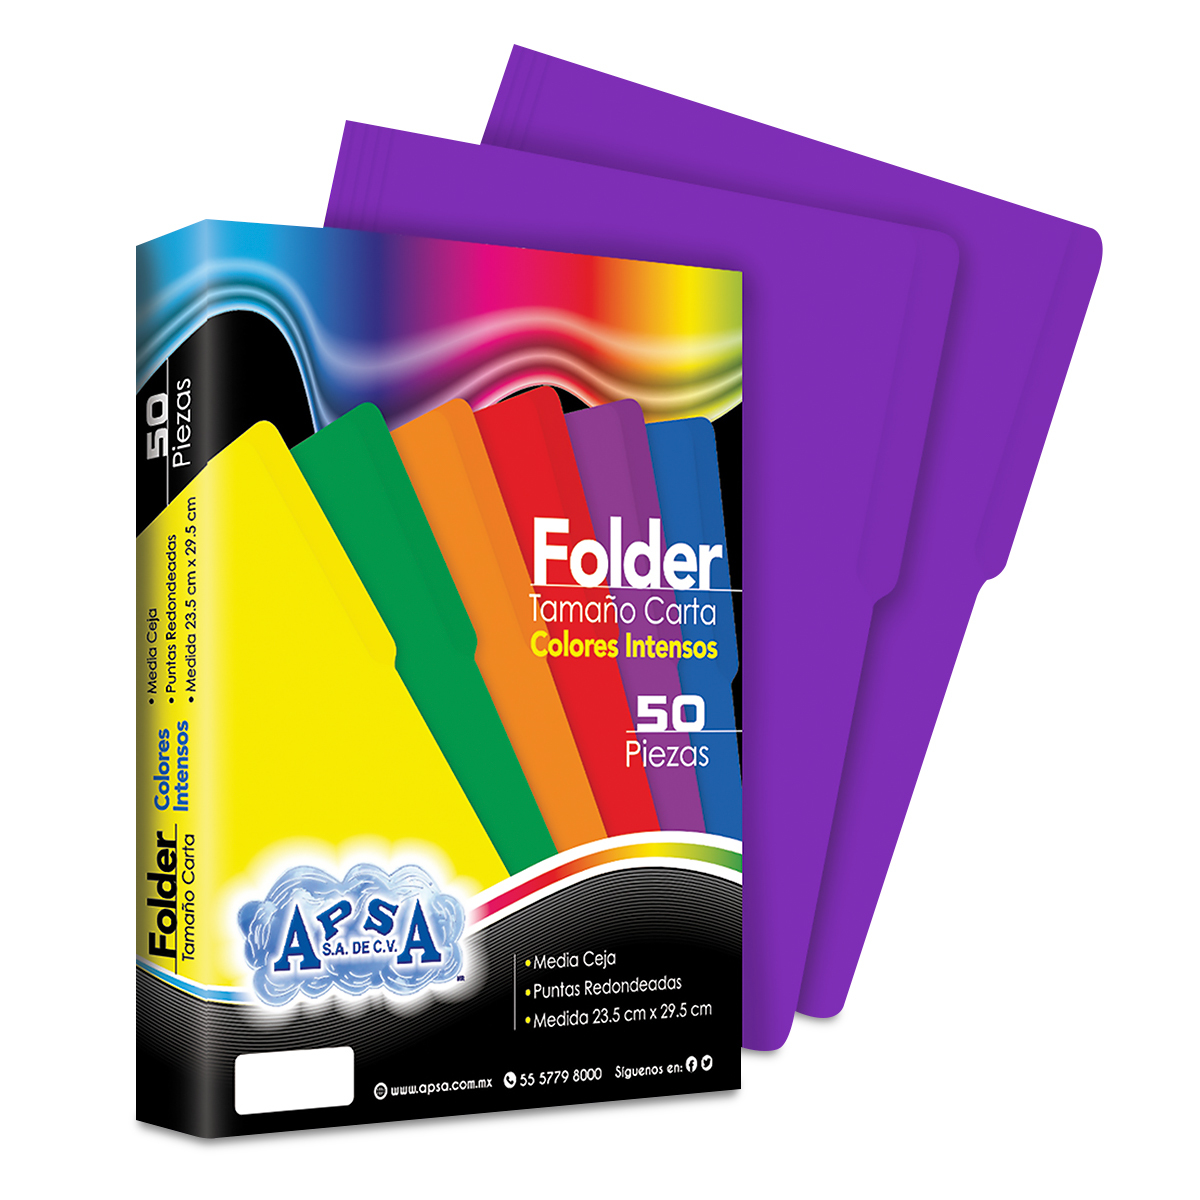 Folders Carta con Media Ceja APSA Morado 50 piezas | Office Depot Mexico